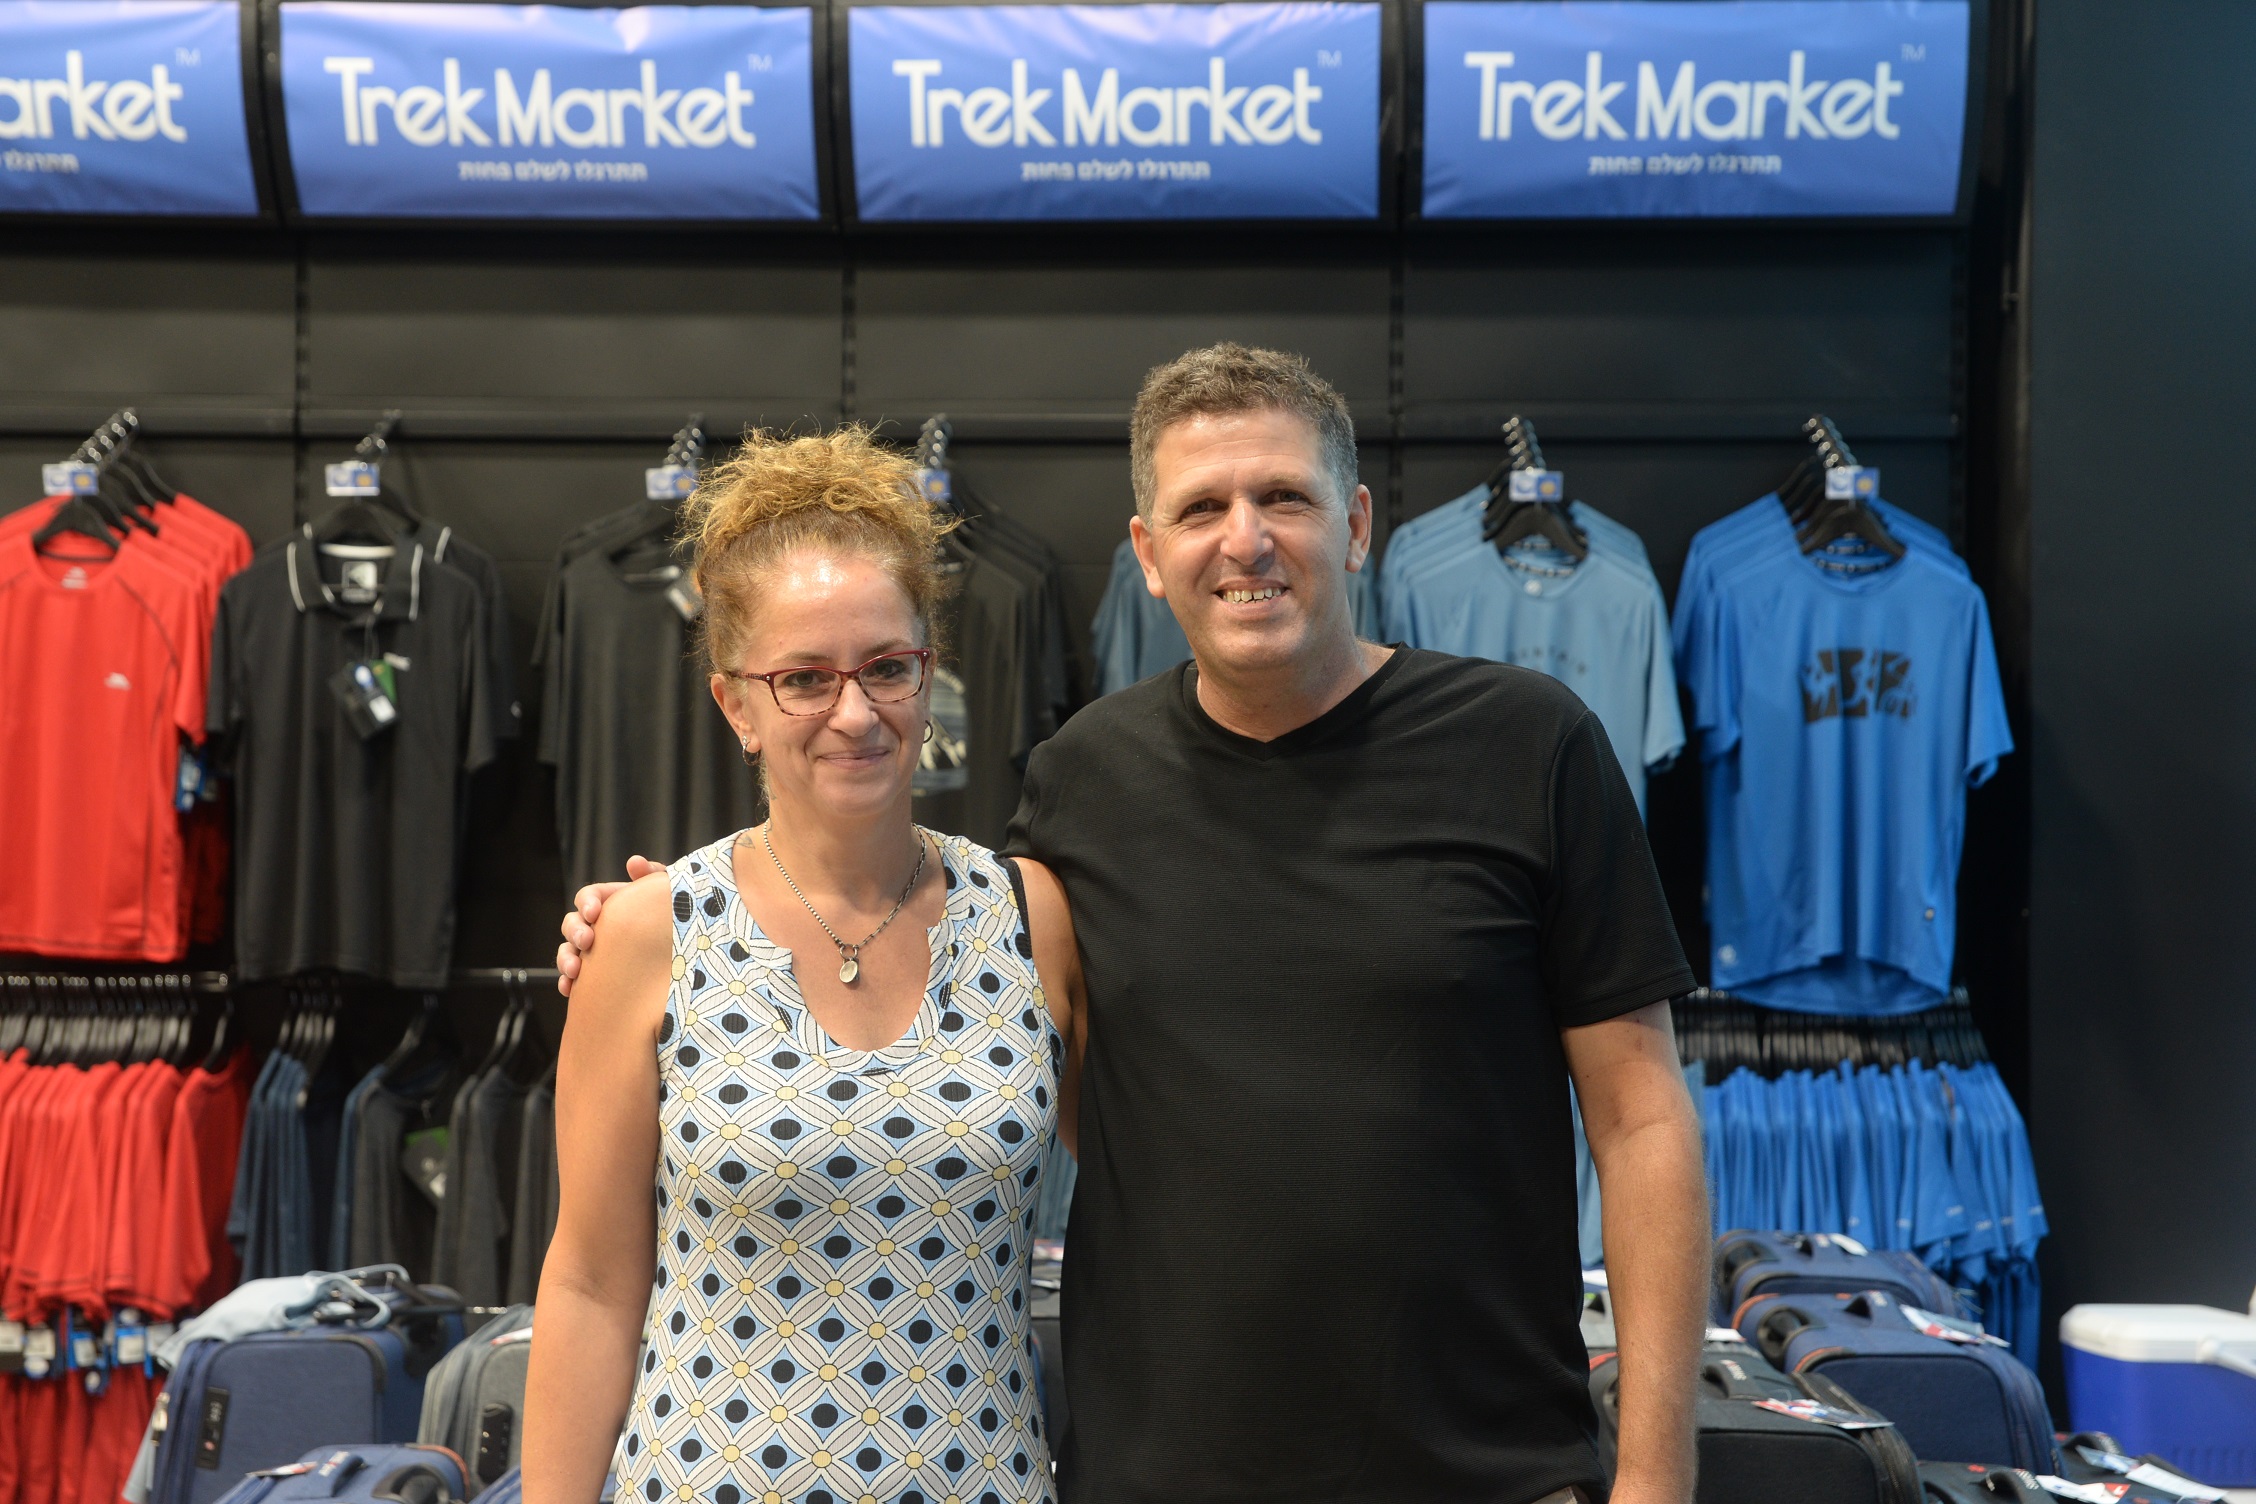 Read more about the article Trek Market – טרק מרקט, הרשת המקצועית למטיילים, נוחתת בקניון כפר סבא הירוקה